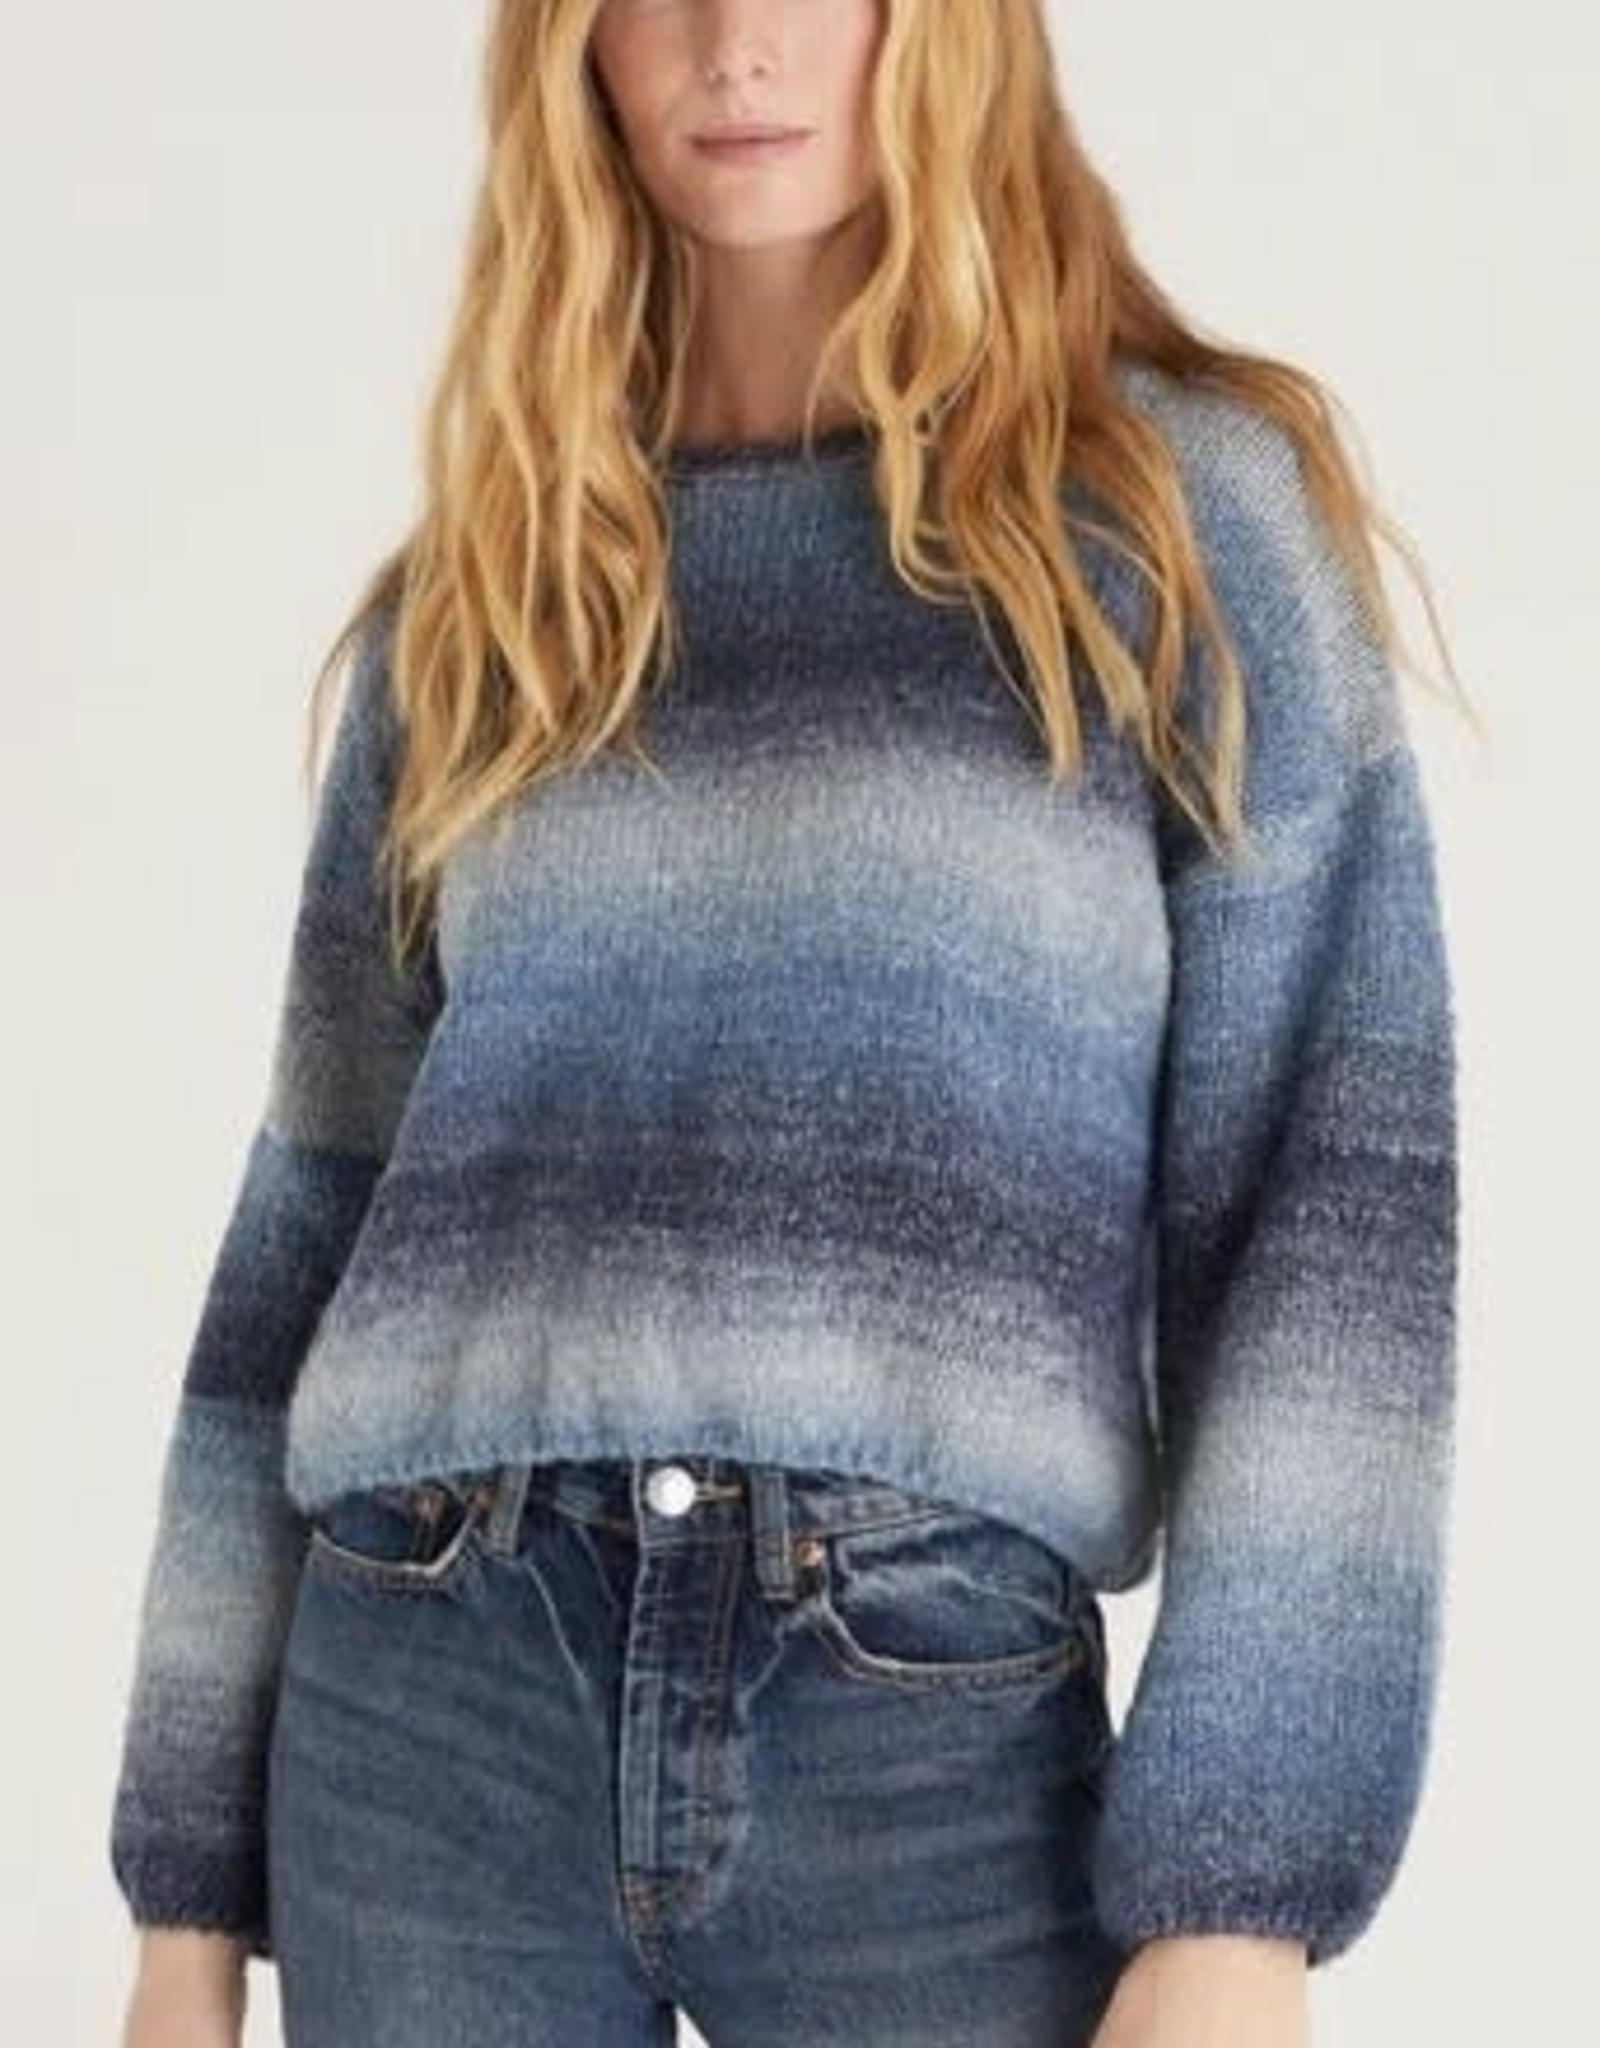 Z Supply Piper Ombre Sweater